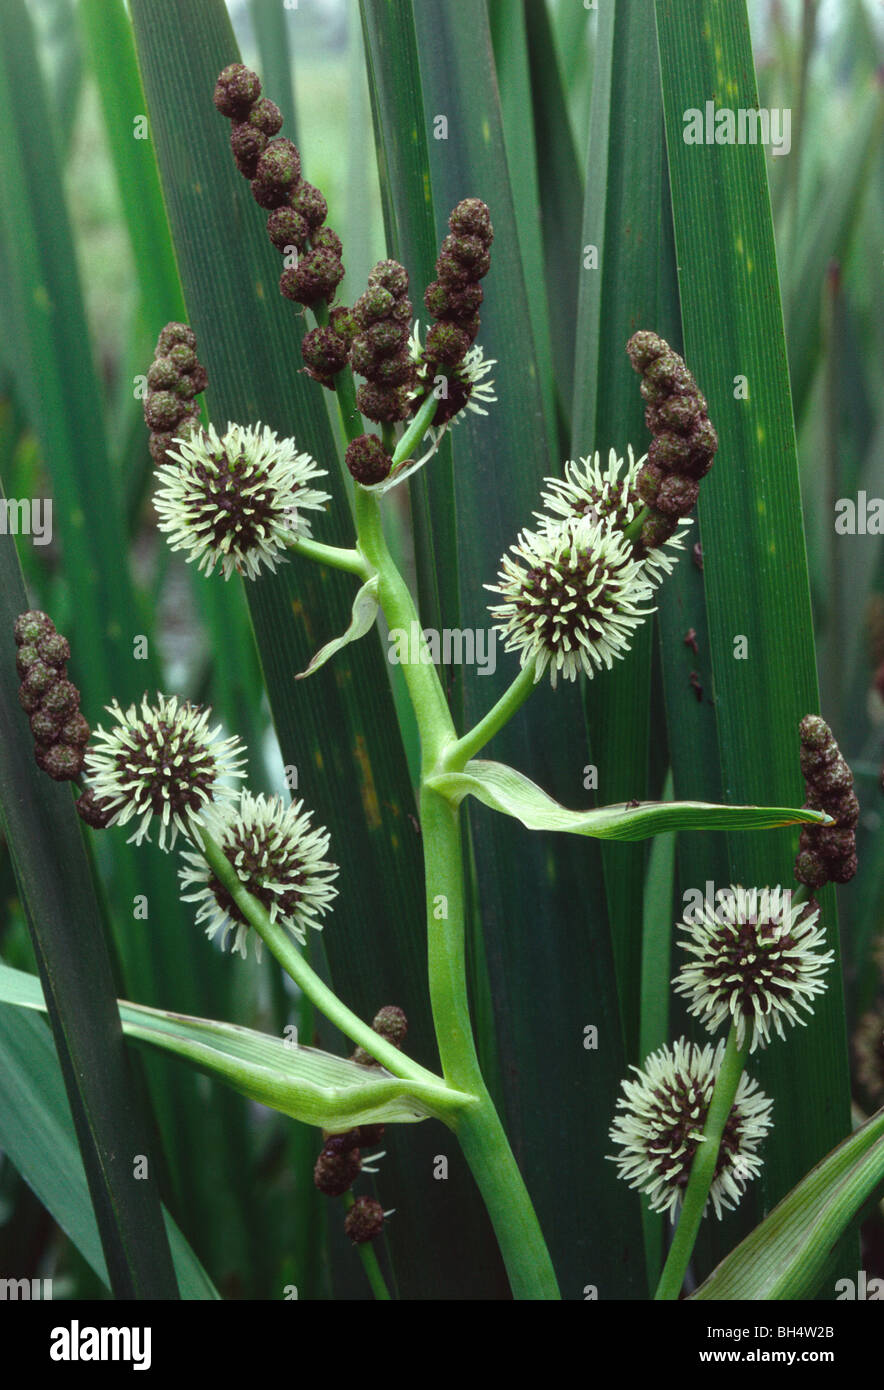 Portraitbild verzweigte Bur-reed Pflanze (Sparganium Erectum) Stockfoto